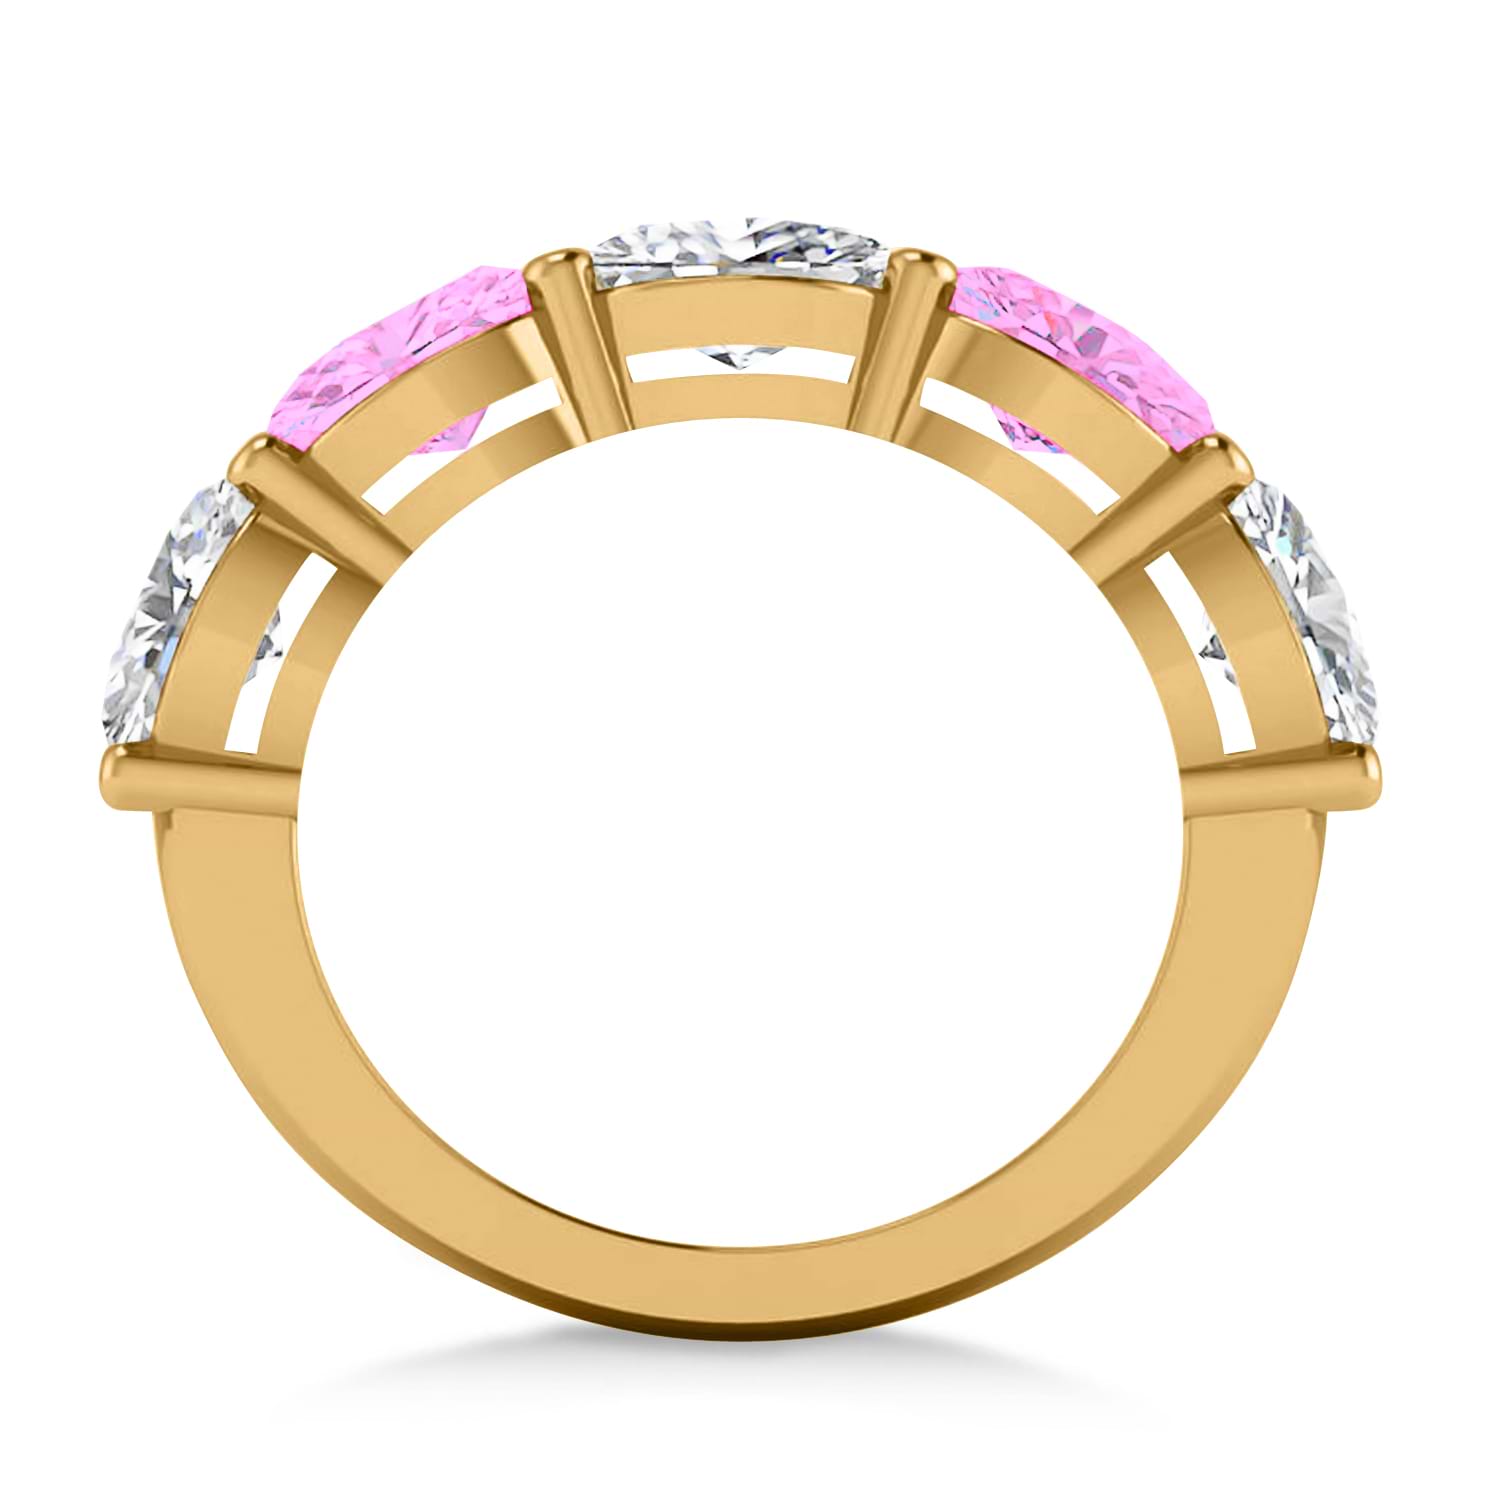 Oval Diamond & Pink Sapphire Five Stone Ring 14k Yellow Gold (5.00ct)